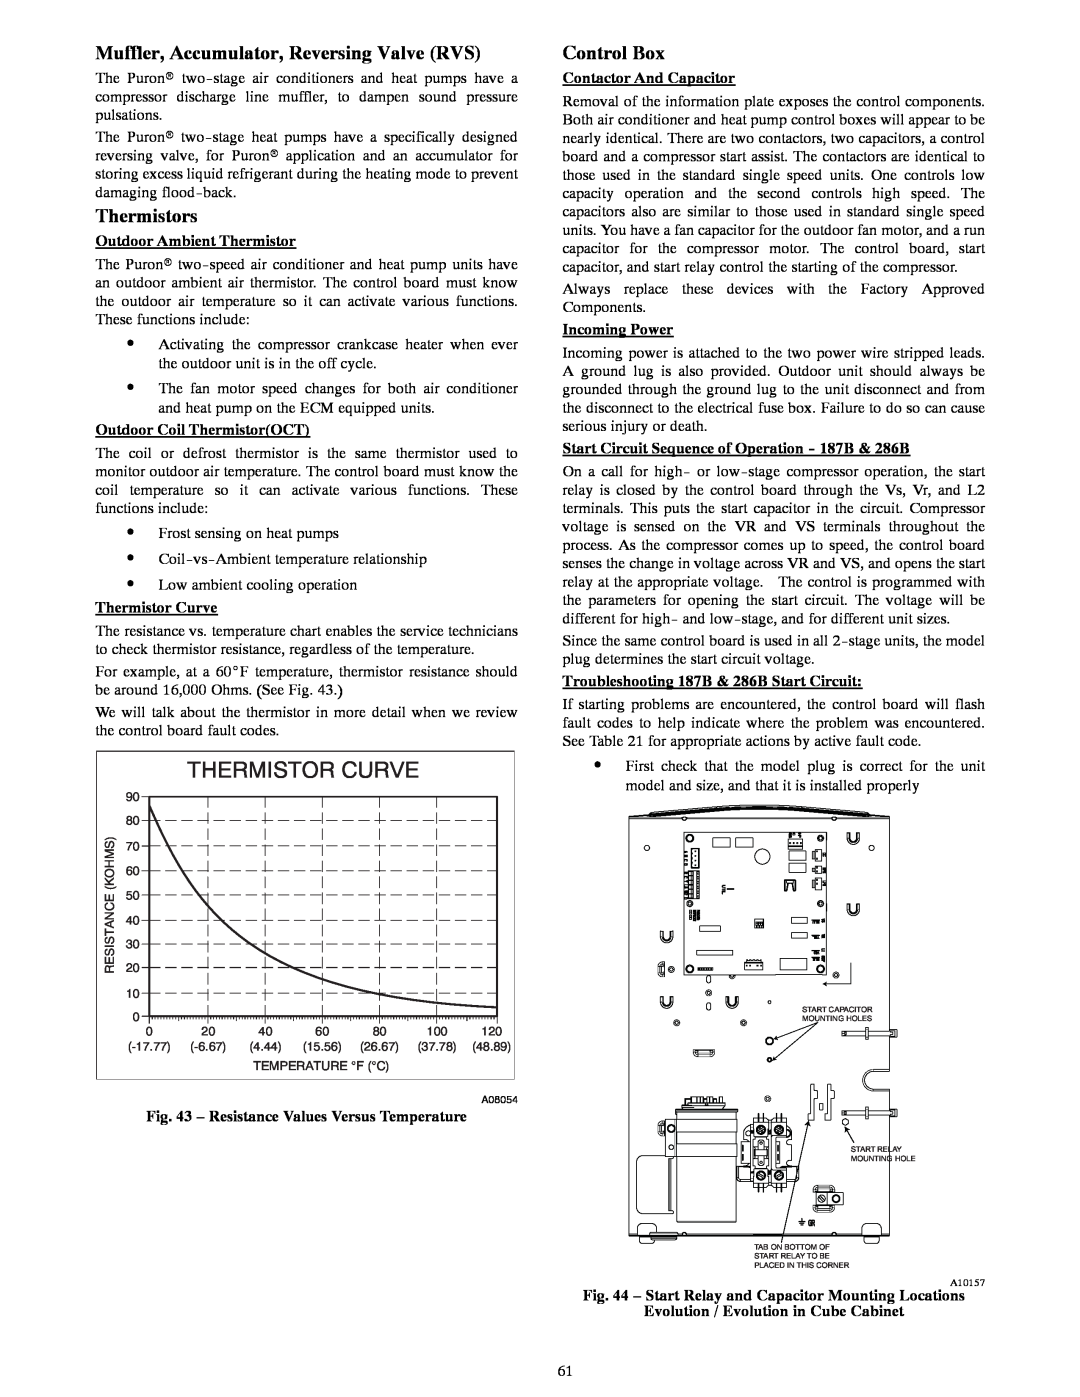 Bryant R-22 Control Box, Thermistor Curve, Muffler, Accumulator, Reversing Valve RVS, Thermistors, Contactor And Capacitor 